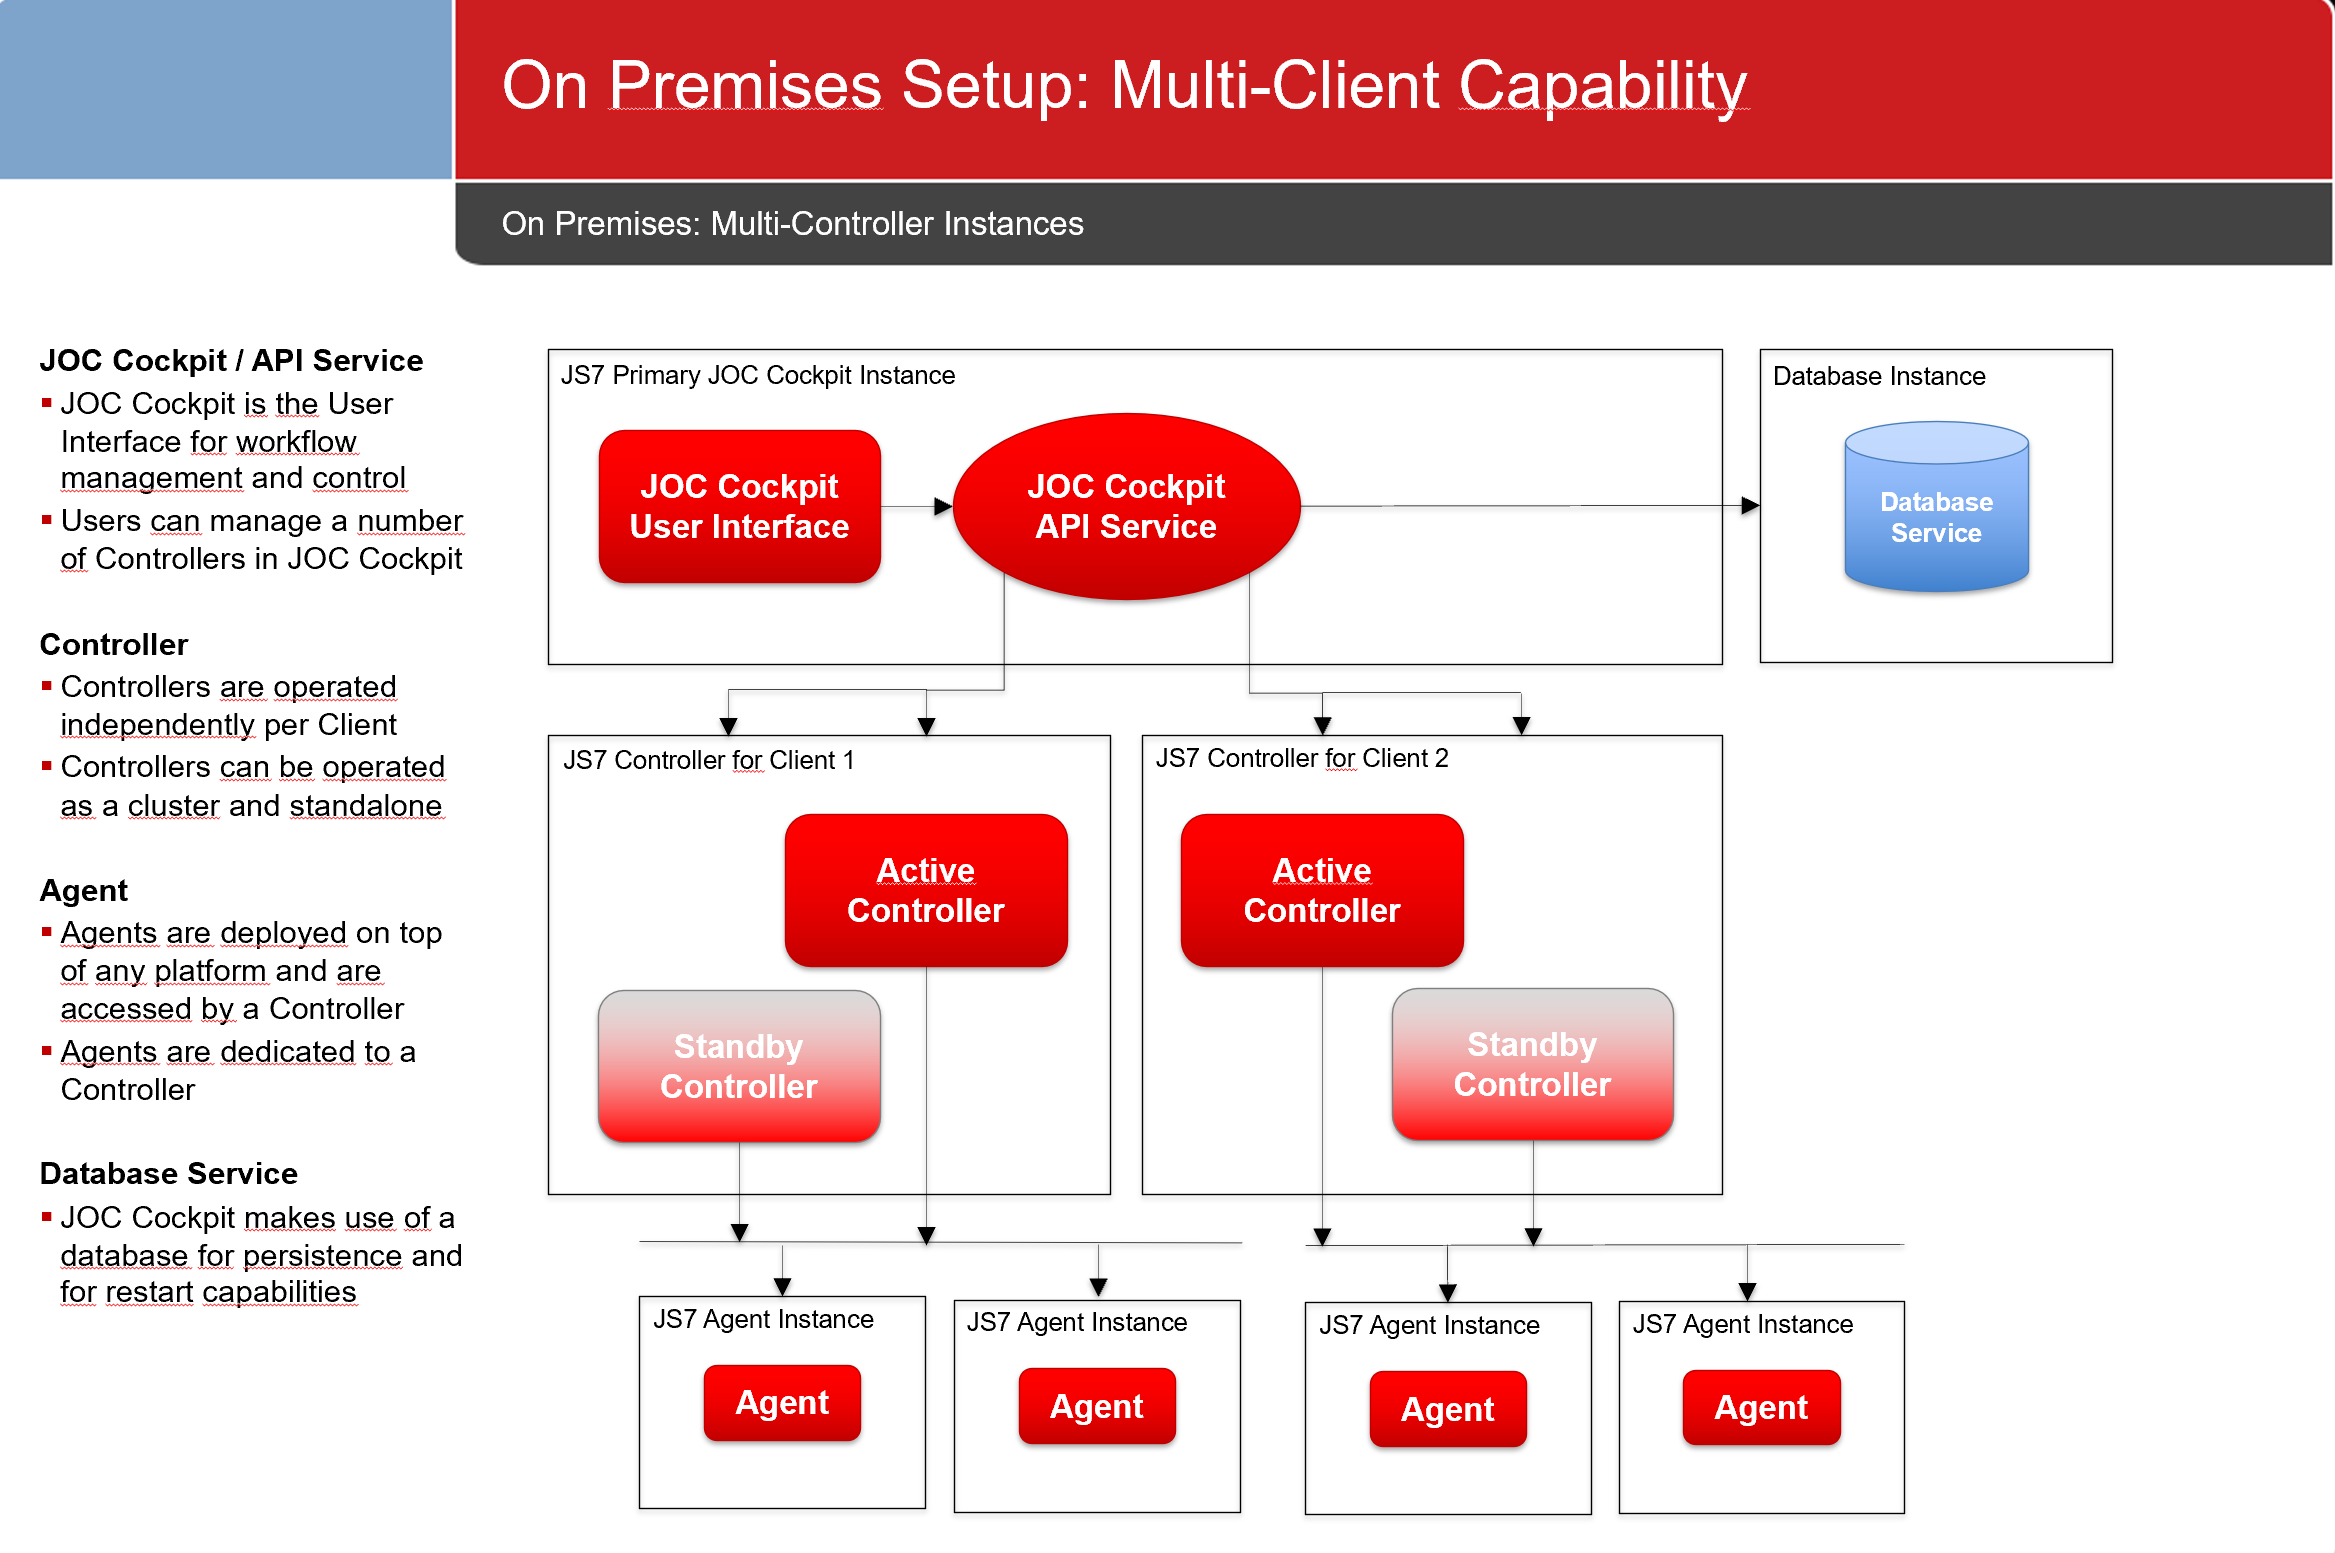 On-premises Setup: Multi-Client Capability